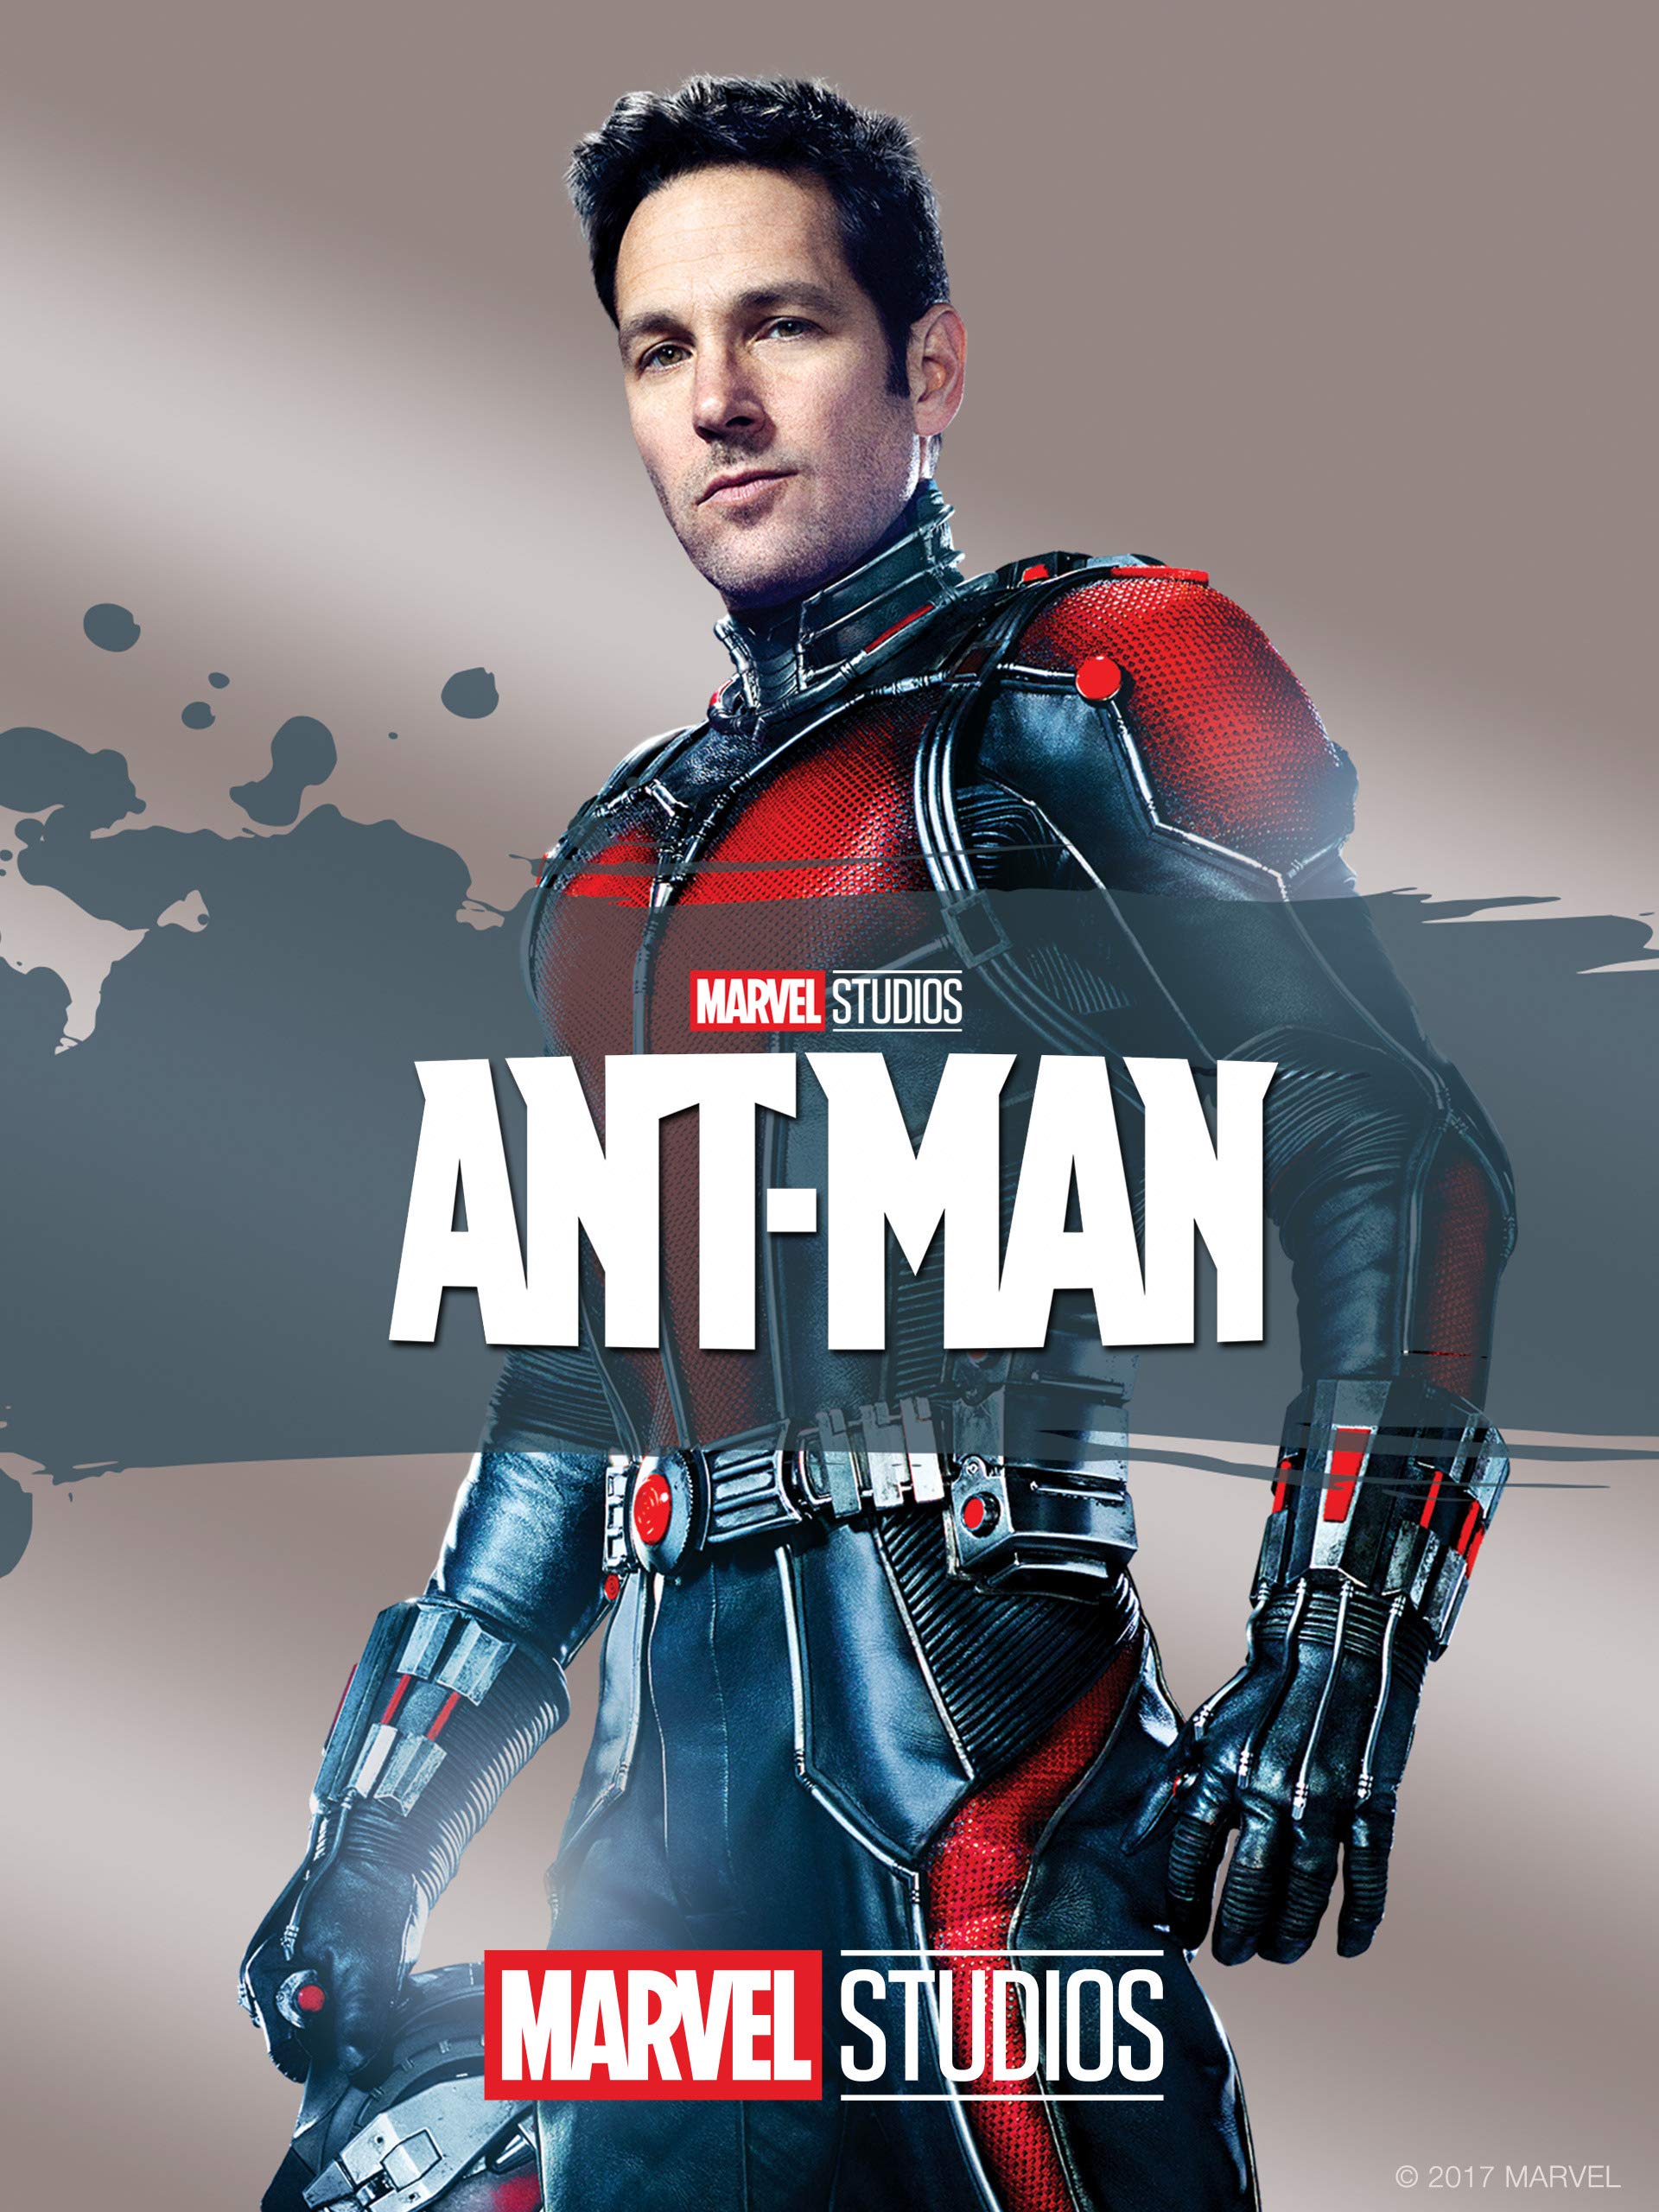 Ant-Man (2015) starring Paul Rudd, Evangeline Lily, Michael Douglas